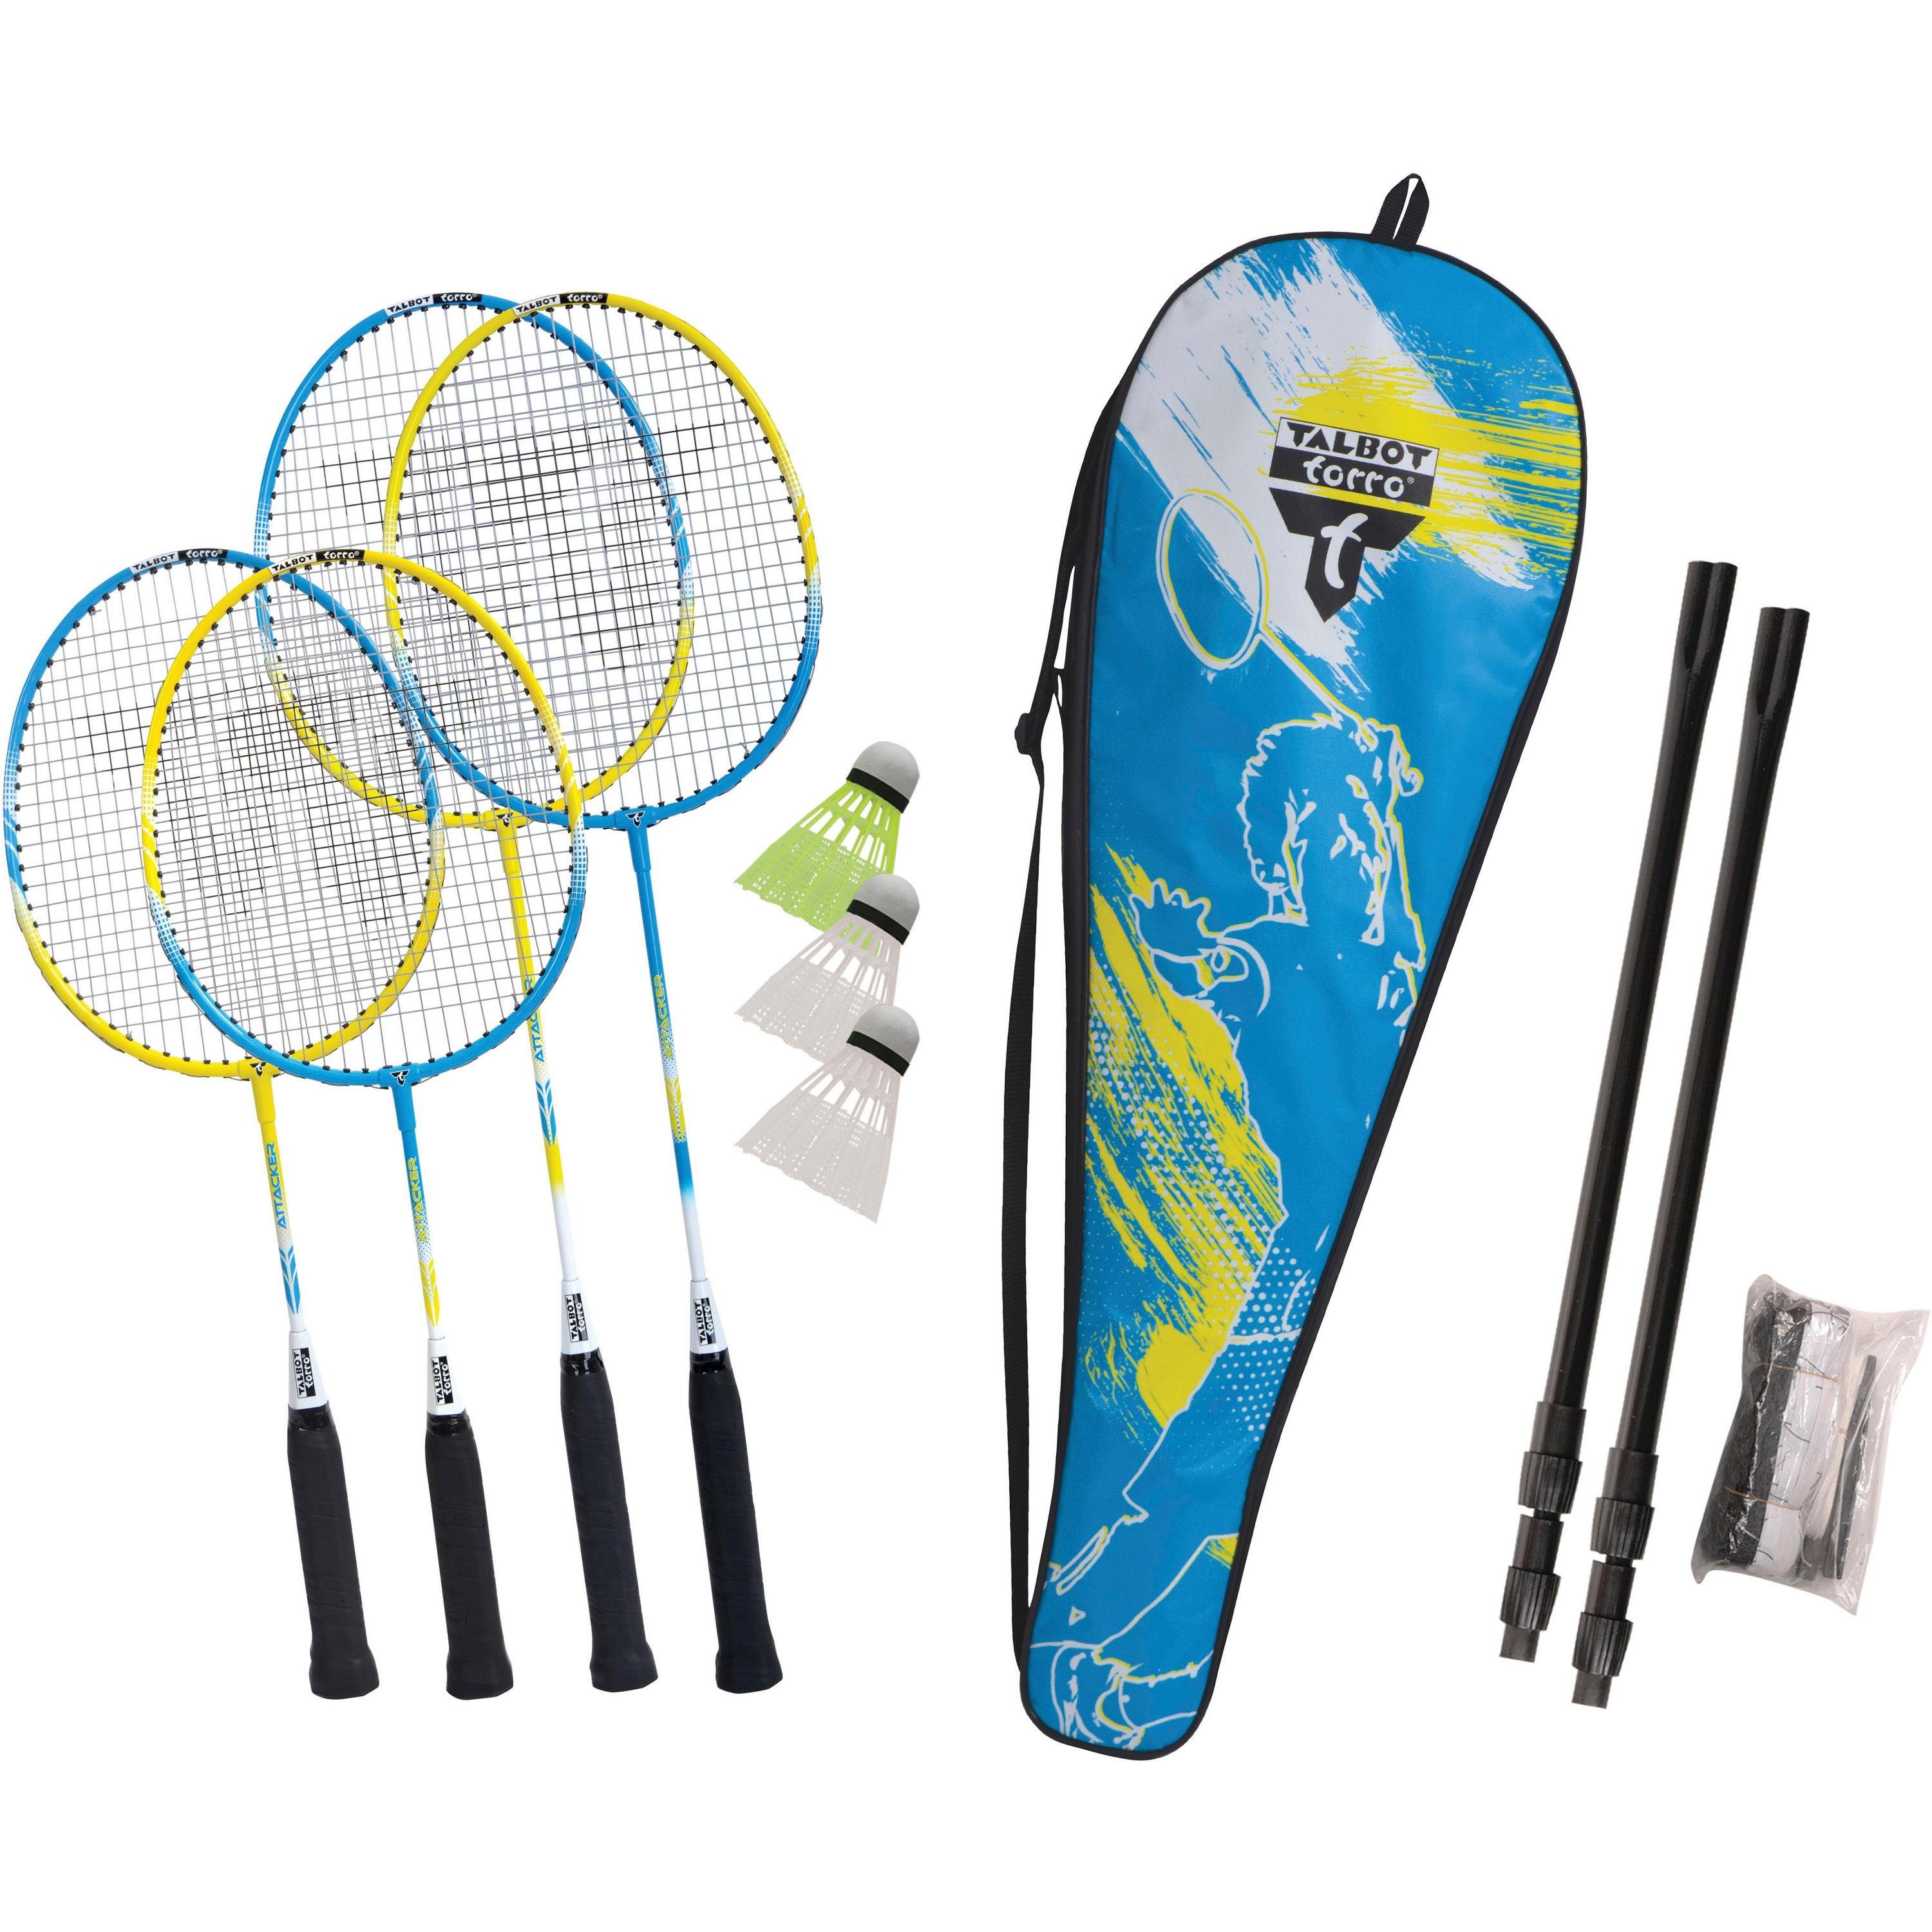 Badmintonschläger SET Talbot-Torro FAMILY